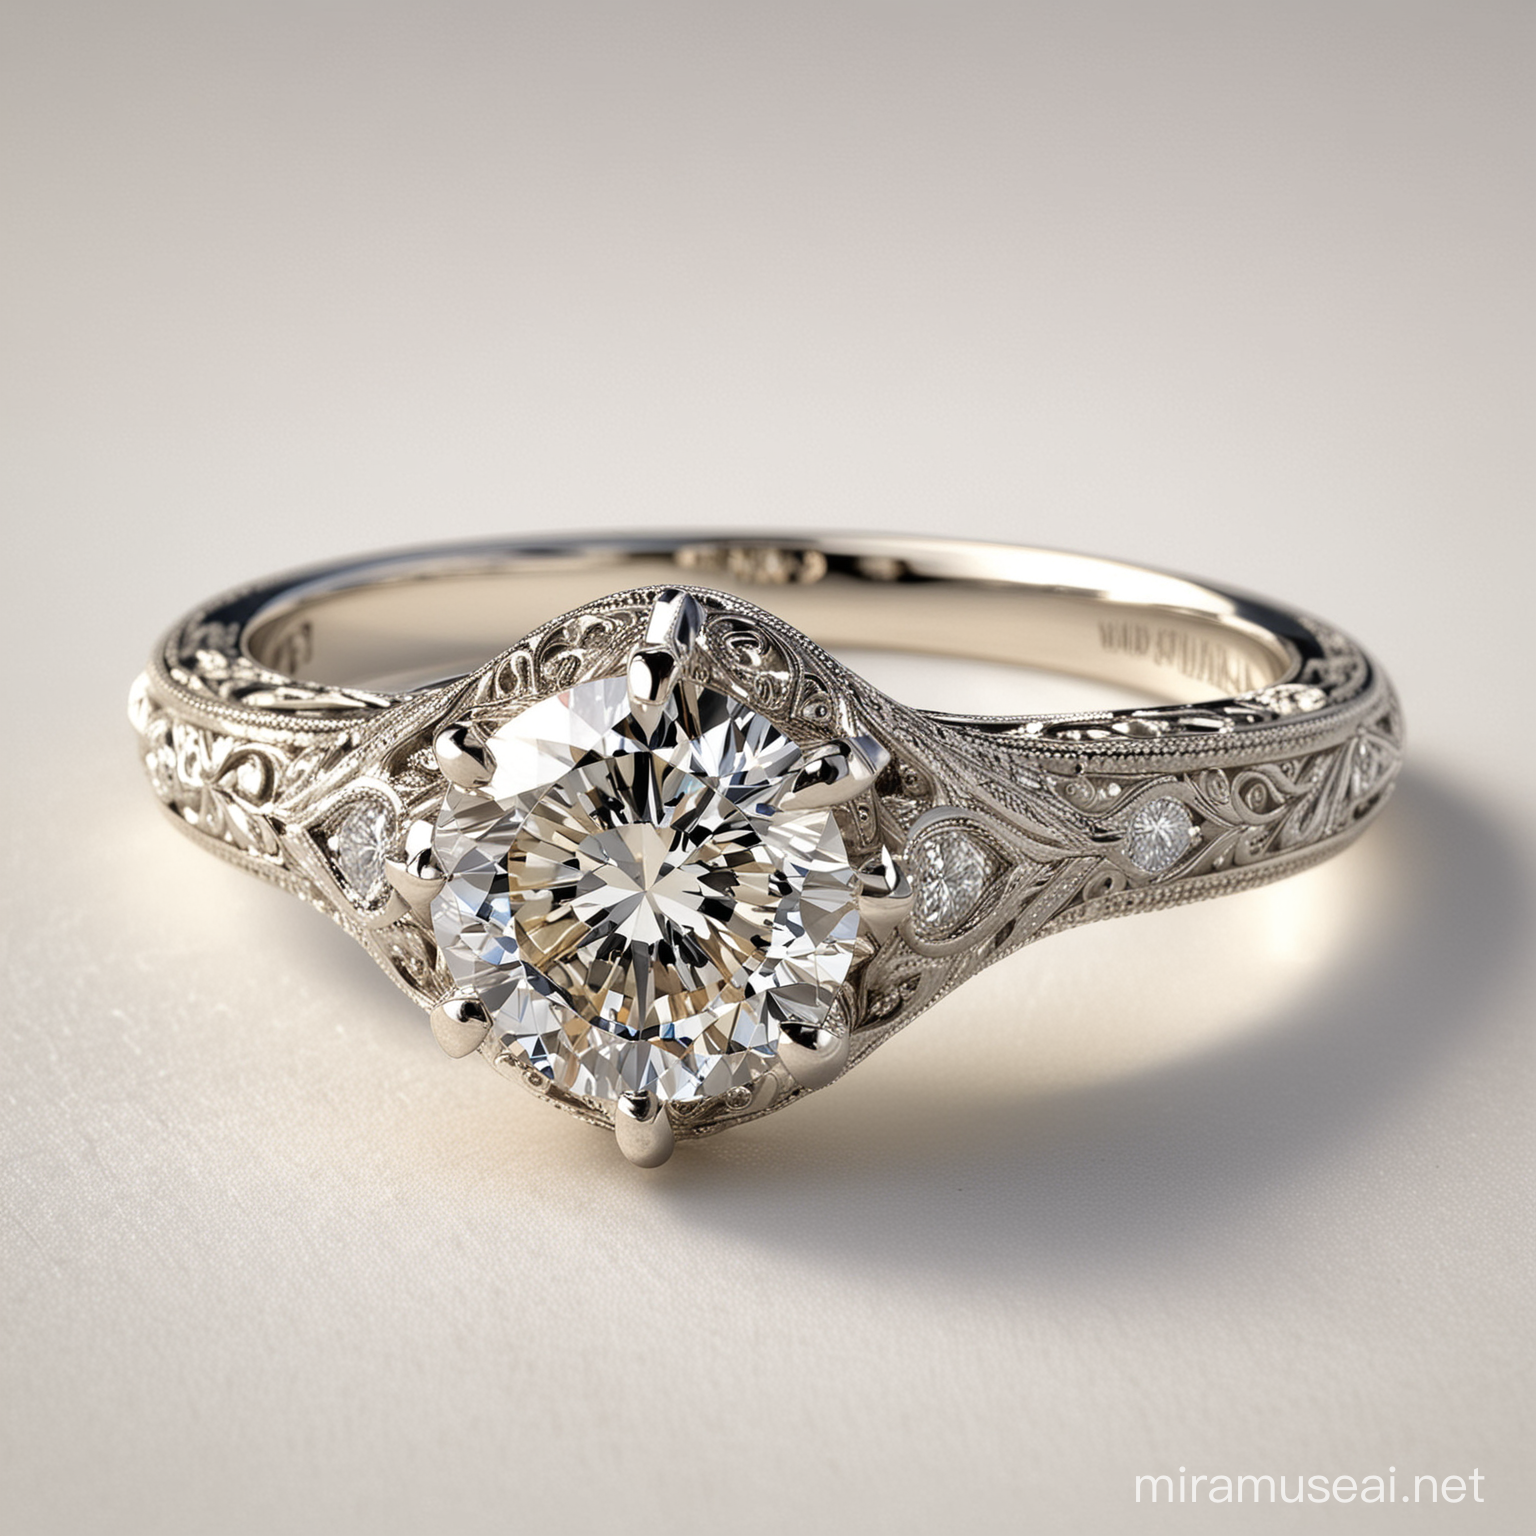 Vintage Engagement Ring with Ornate Floral Motifs